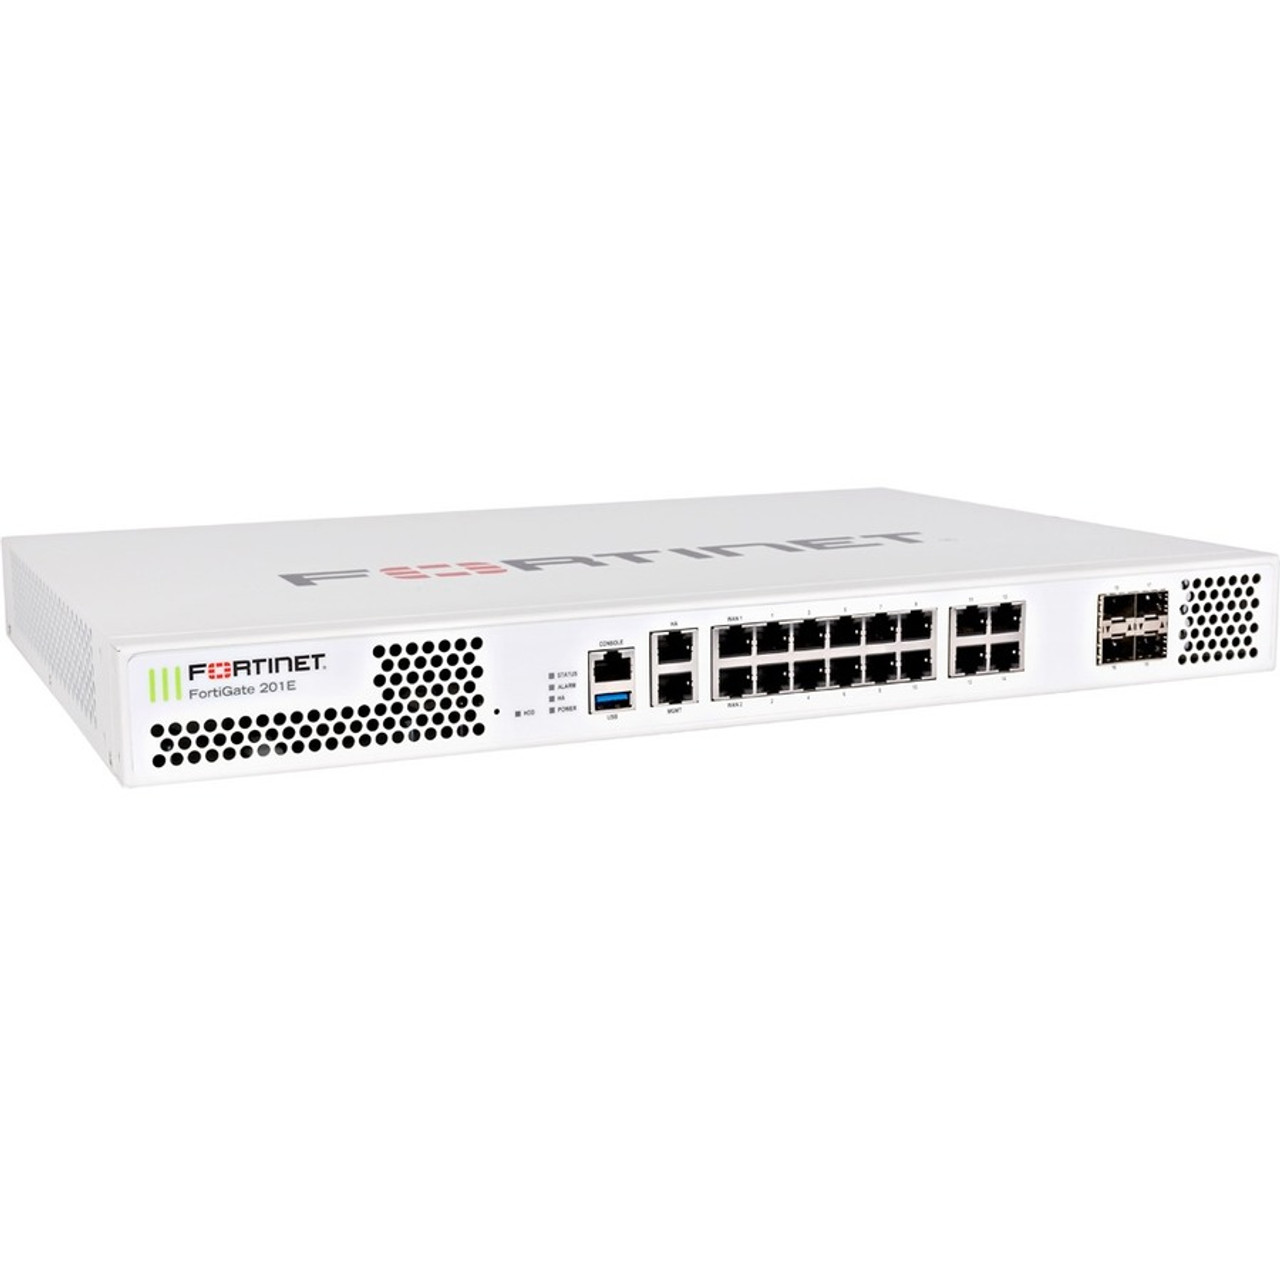 Fortinet FortiGate FG-201E Network Security/Firewall Appliance - 18 Port - 1000Base-T, 1000Base-X - Gigabit Ethernet - AES (256-bit), SHA-256 - 500 VPN - 16 x RJ-45 - 4 Total Expansion Slots - 1 Year 24x7 FortiCare and FortiGuard Enterprise